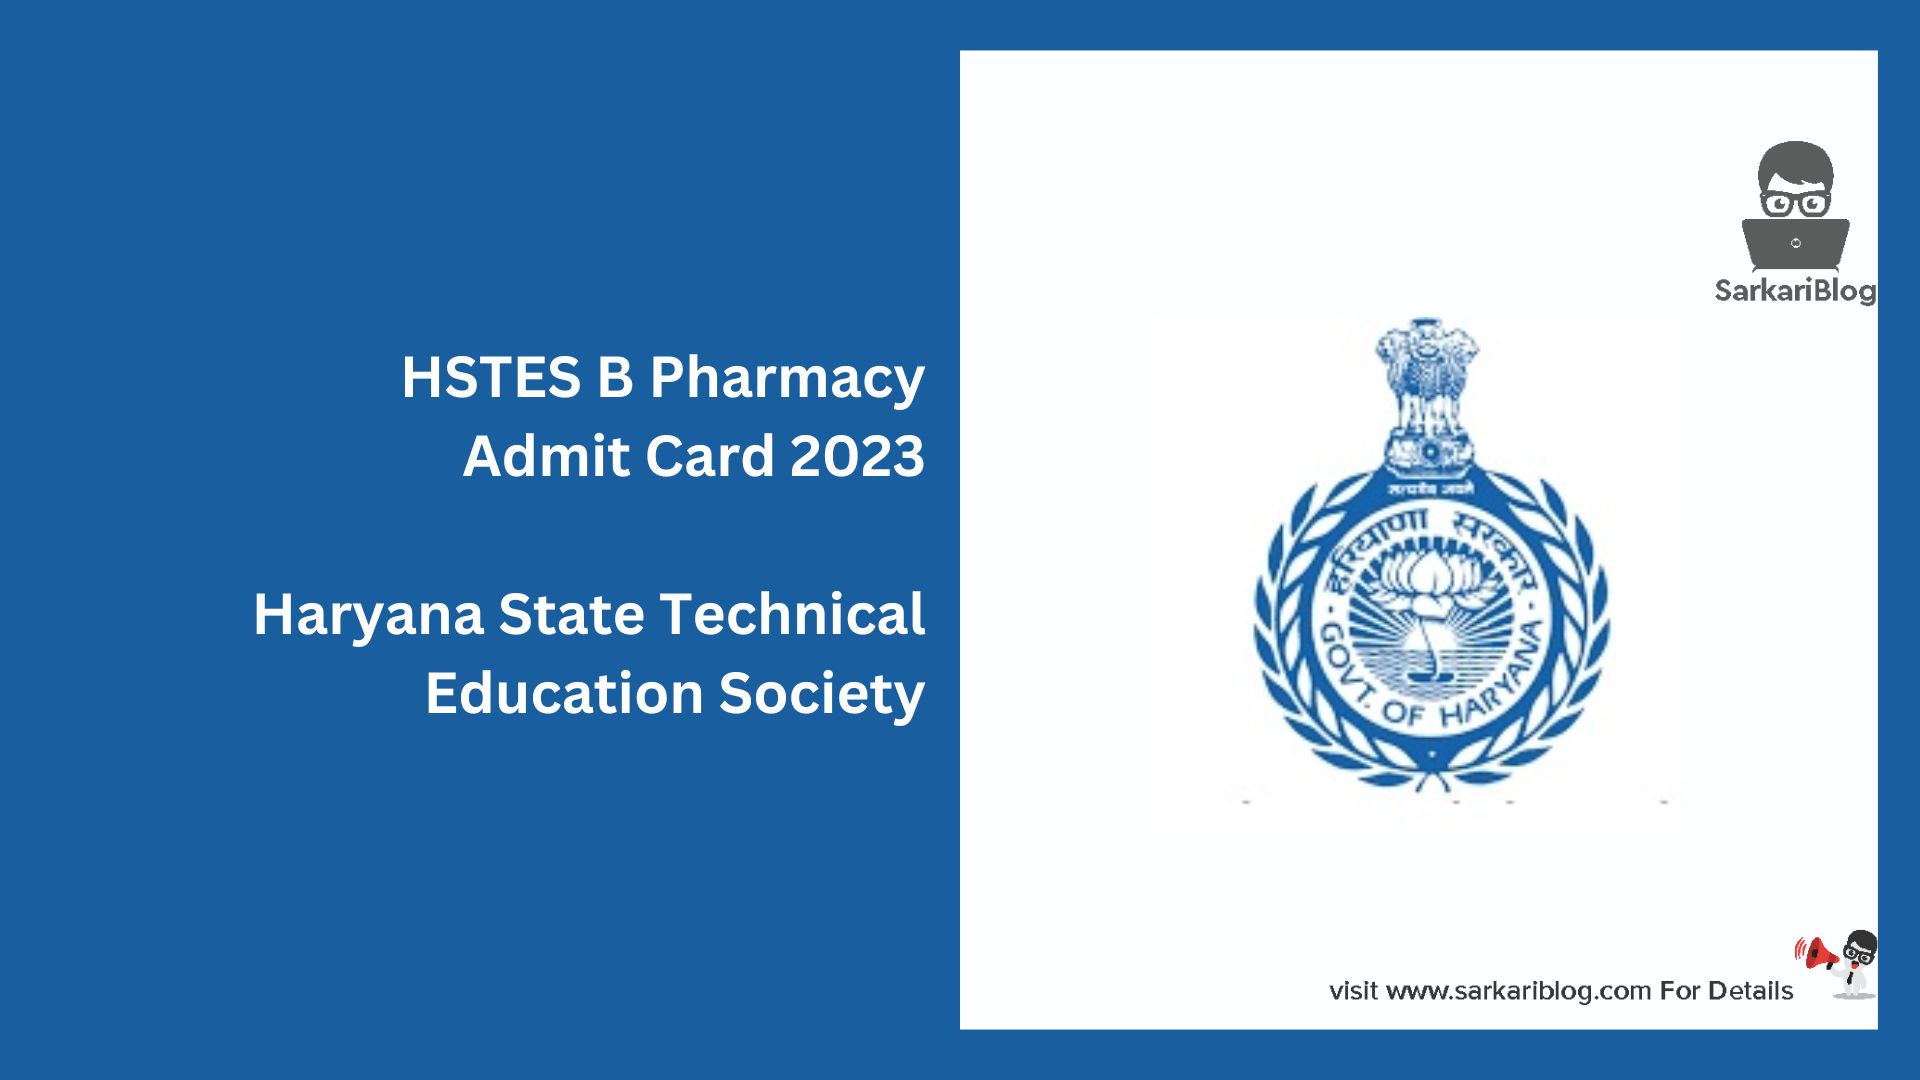 HSTES B Pharmacy Admit Card 2023